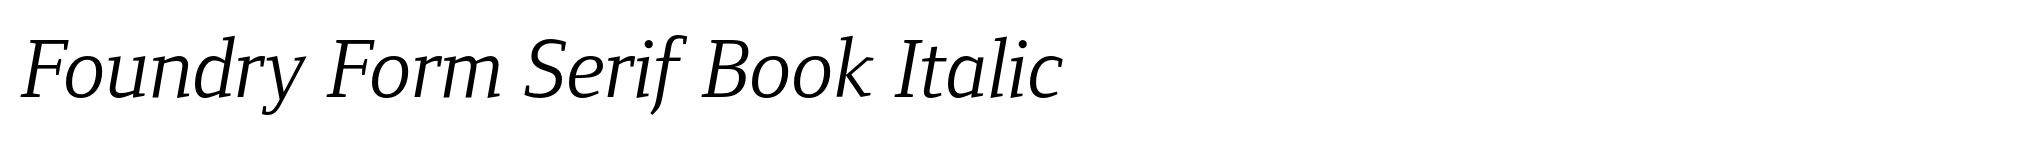 Foundry Form Serif Book Italic image